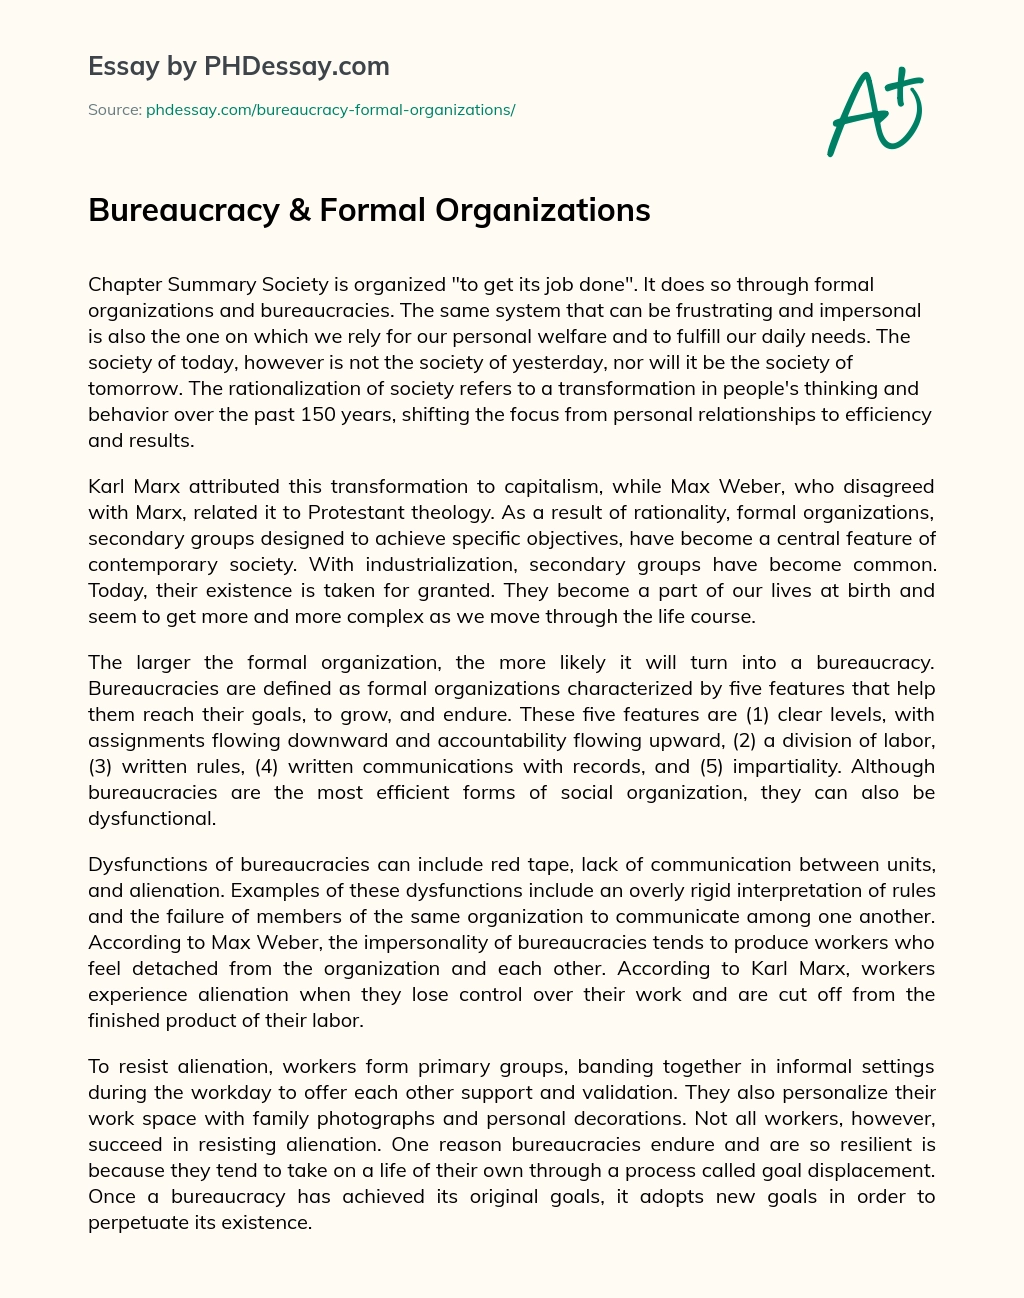 Bureaucracy & Formal Organizations essay